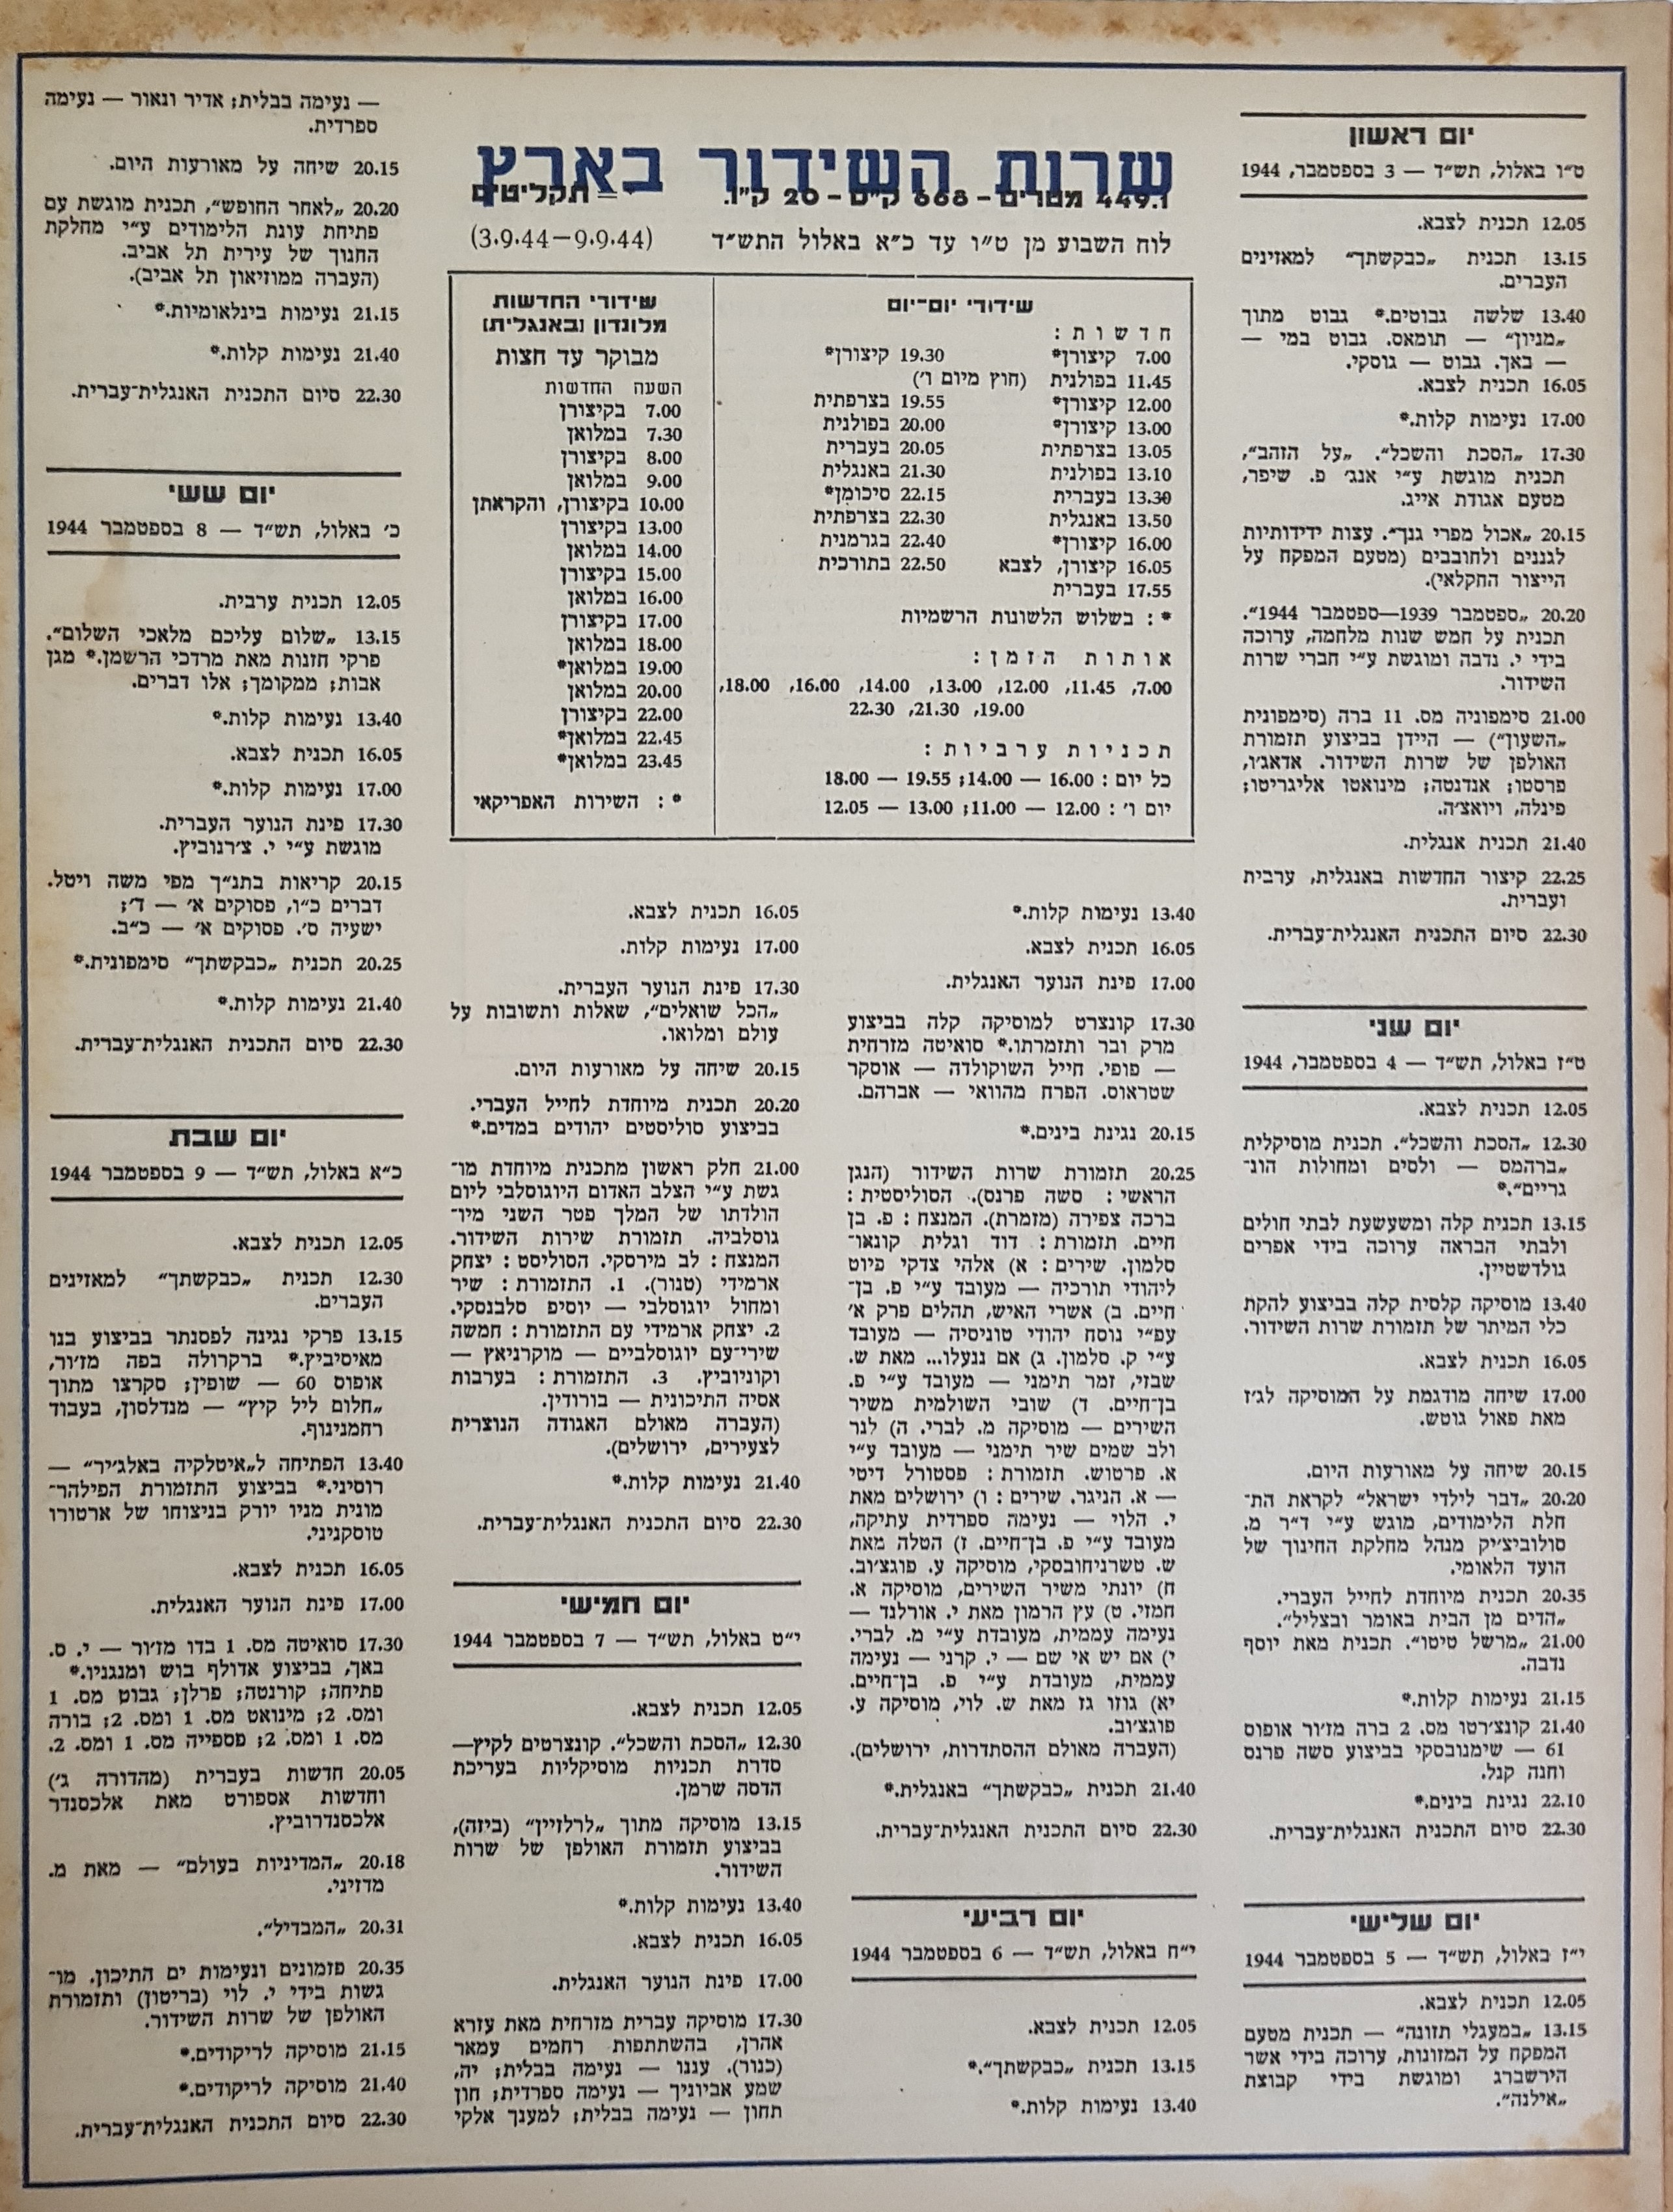 Radio Schedule: September3, 1944 - September 9, 1944